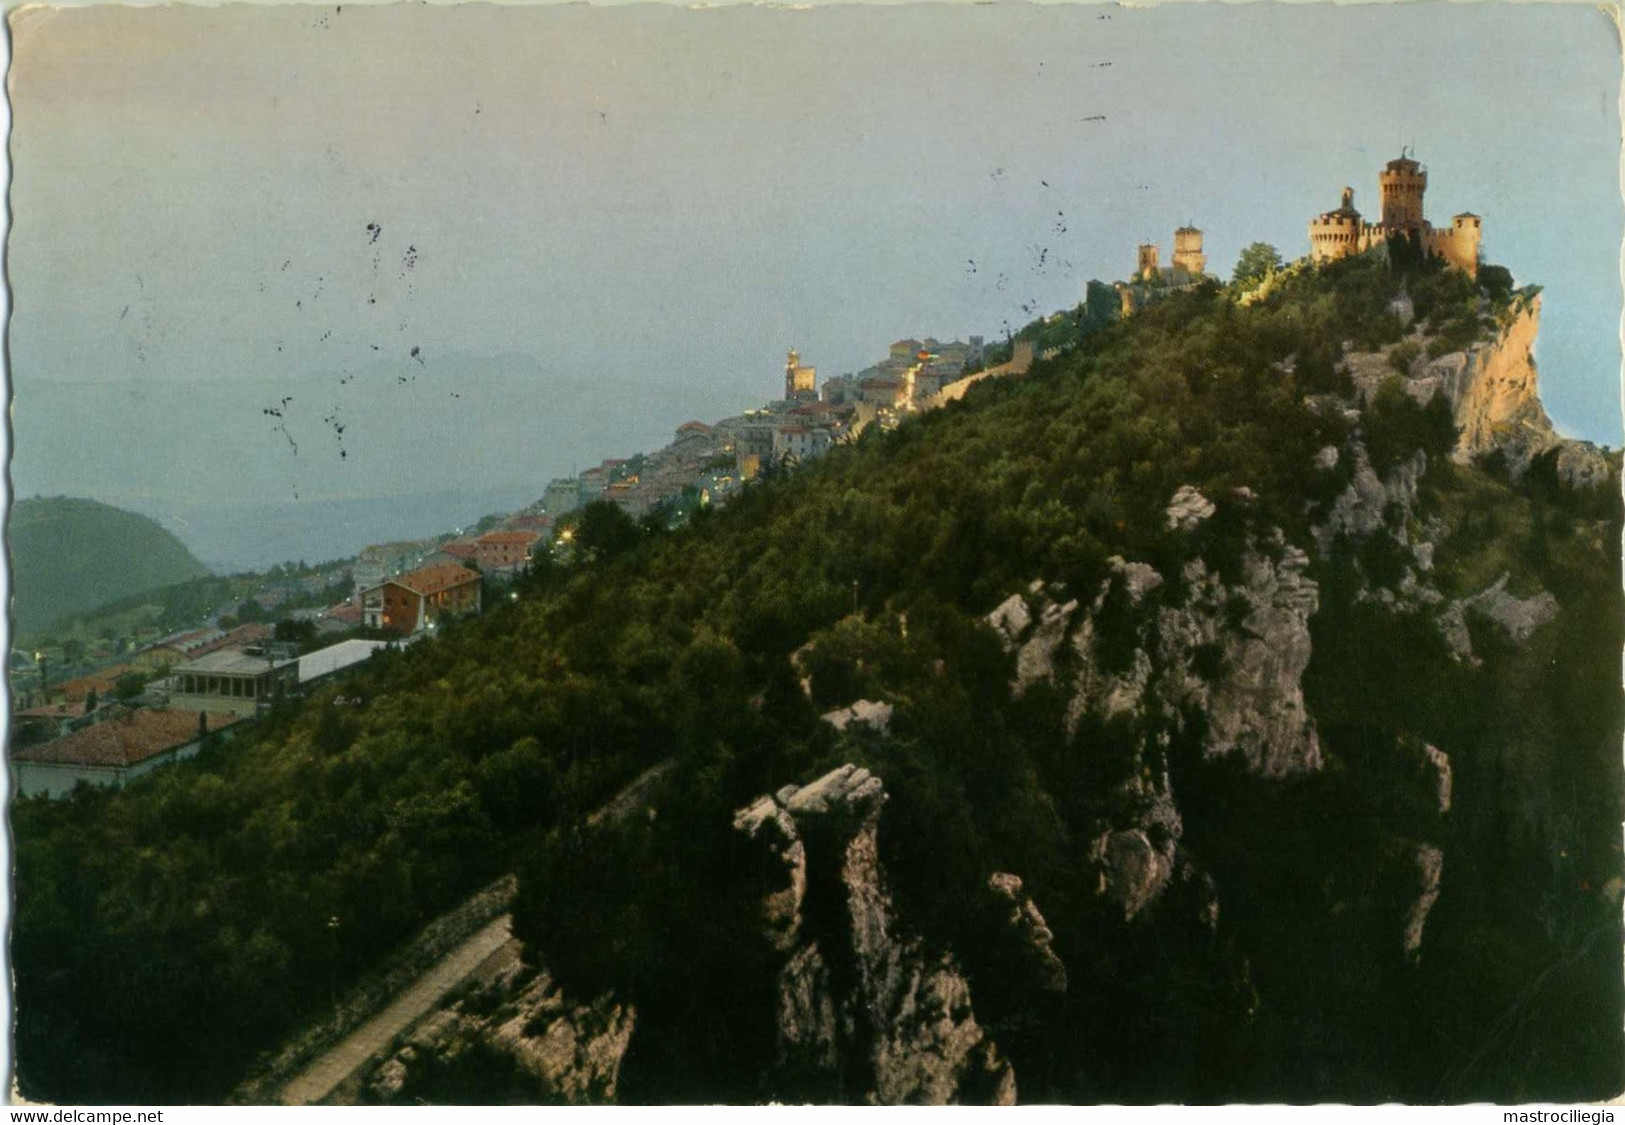 REPUBBBLICA DI SAN MARINO  Panorama  Notturno  Nice Stamps - San Marino